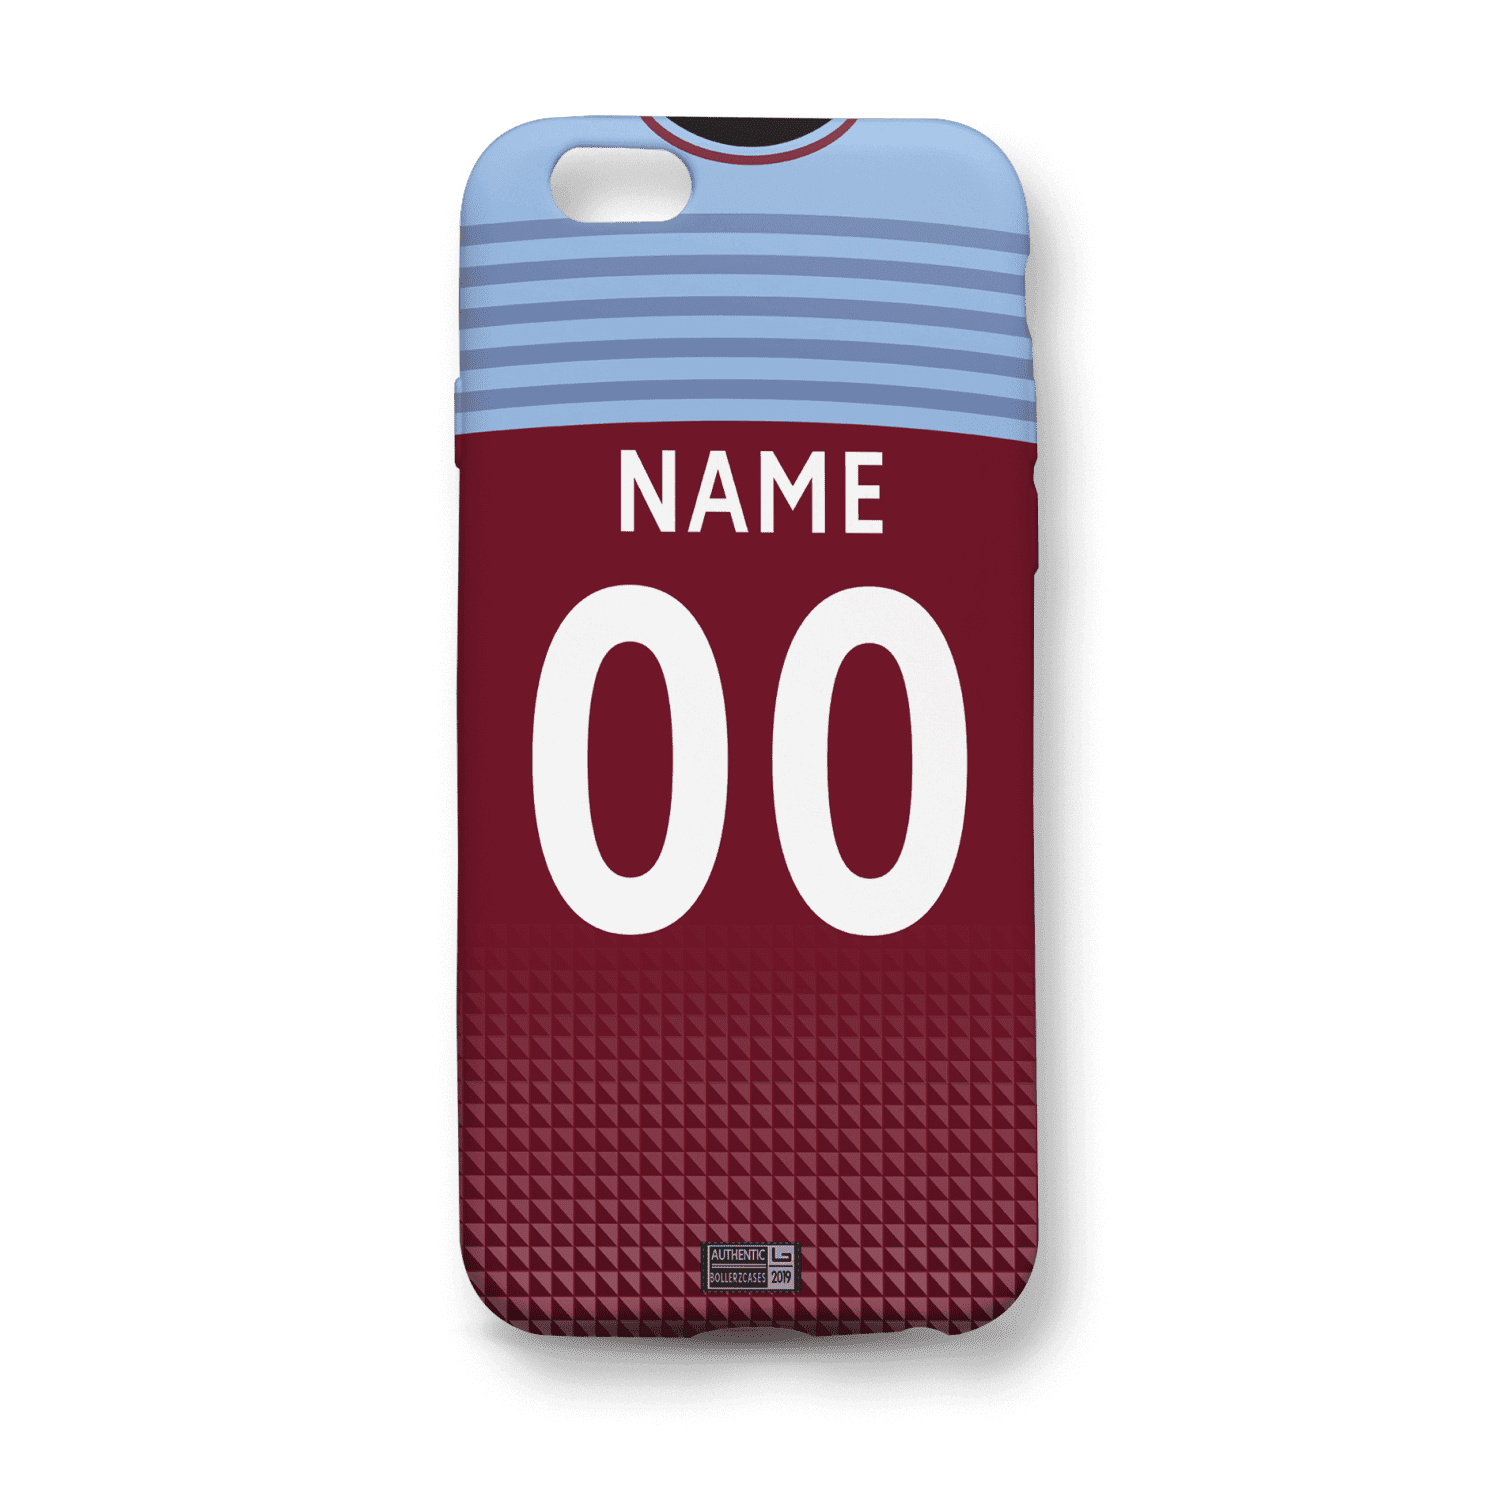 West Ham 19-20 Home kit phone case